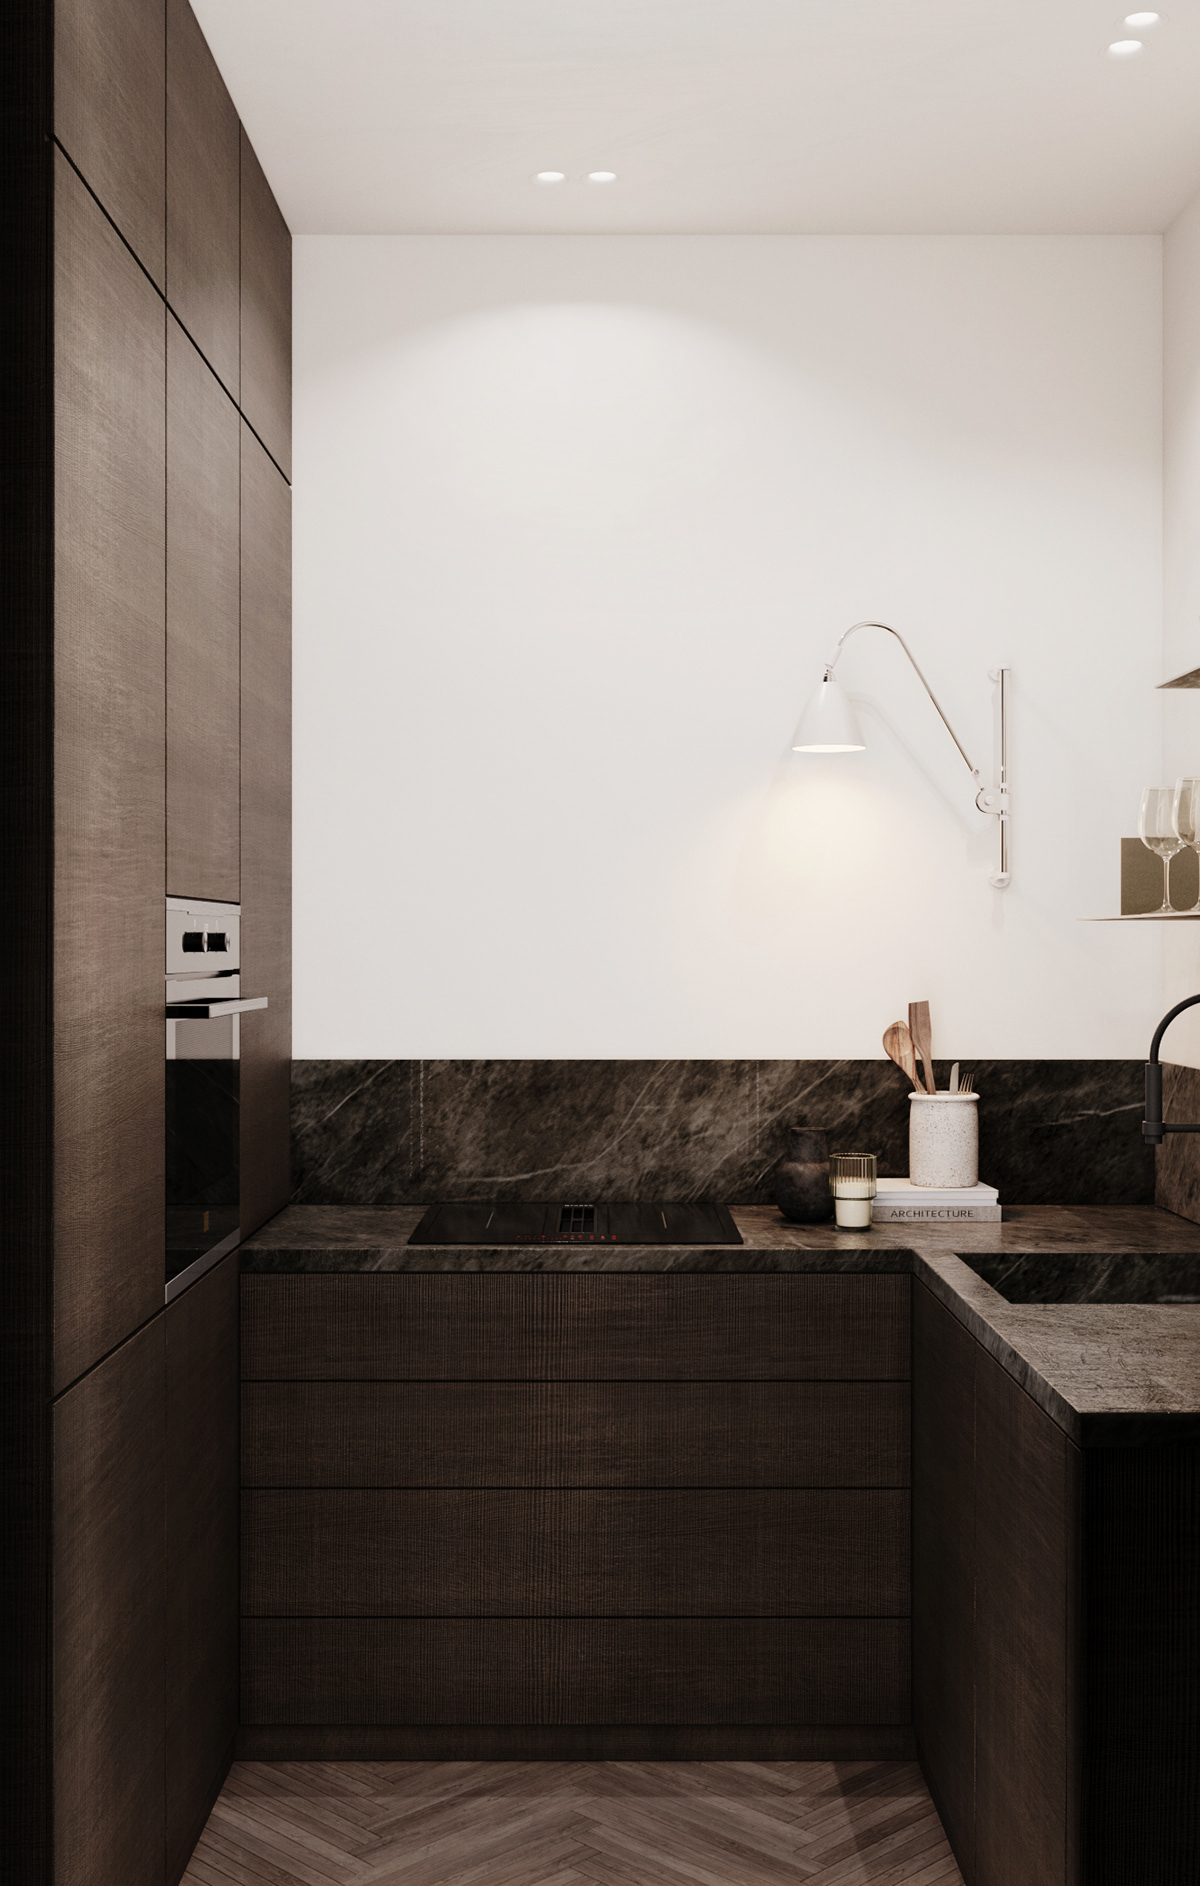 apartment living room kitchen badroom 3d max corona render  modern interior modern interior design visualization design interior